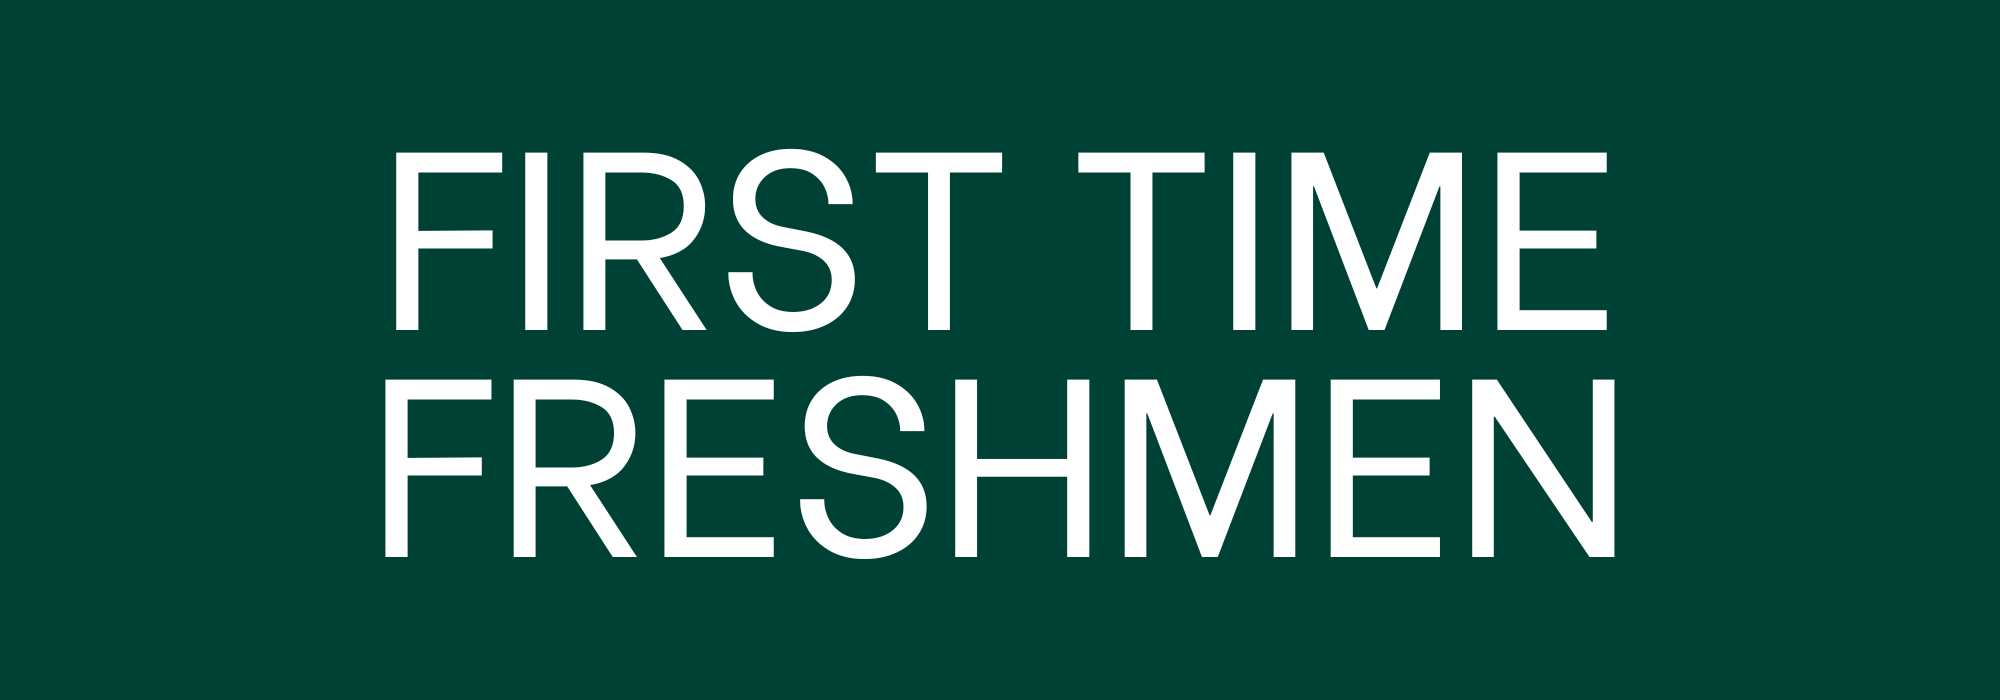 first time freshmen scholarship web page